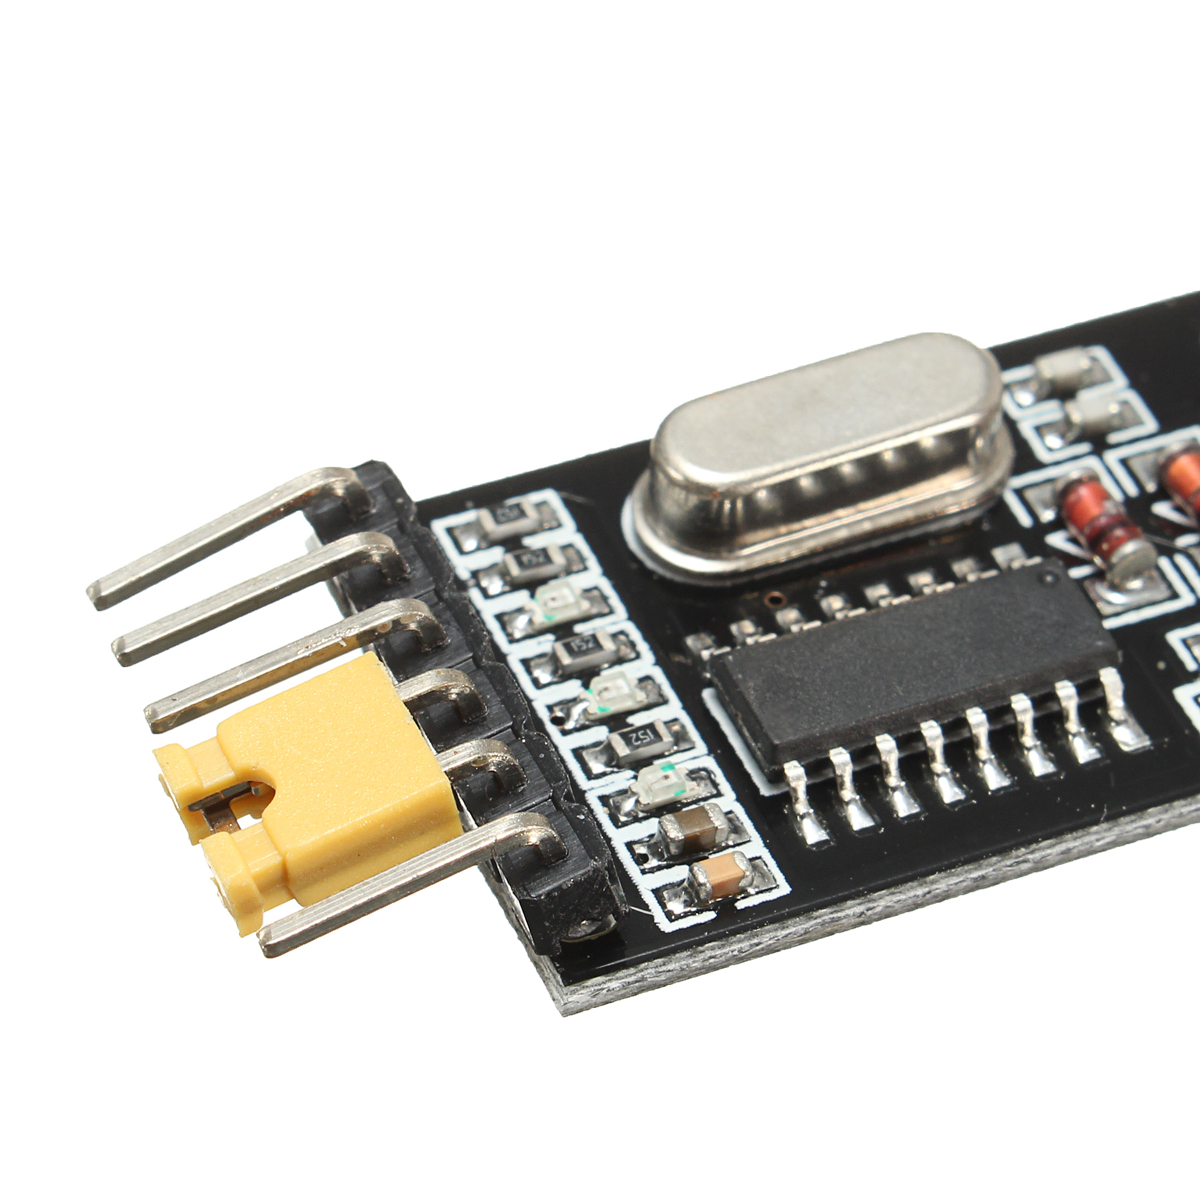 33V-5V-USB-to-TTL-Converter-CH340G-UART-Serial-Adapter-Module-STC-1232728-5